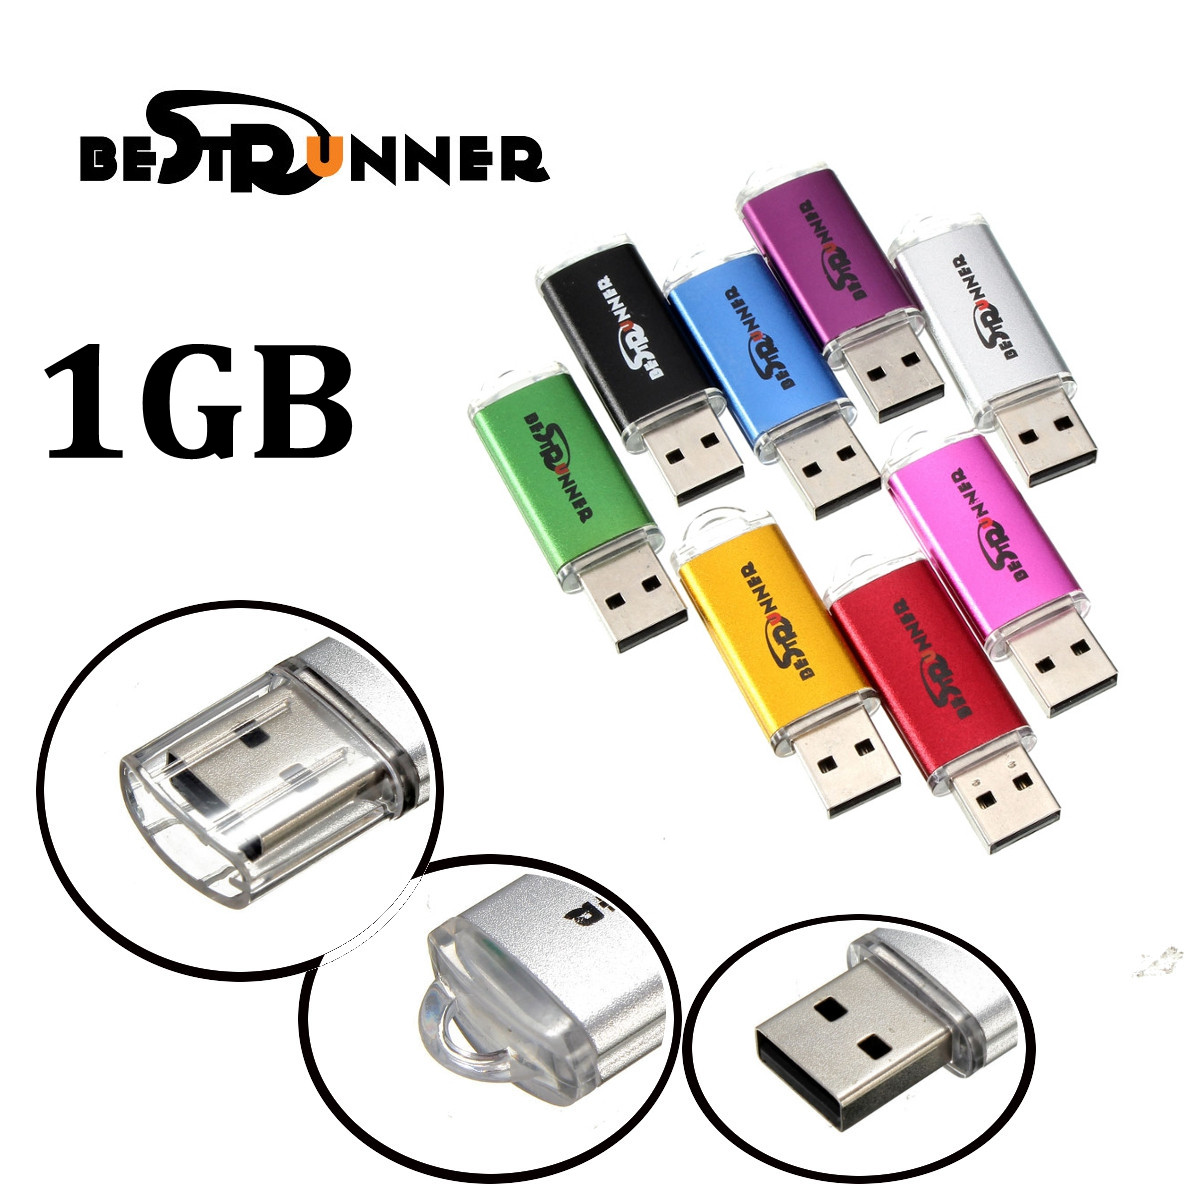 Bestrunner-Multi-Color-Portable-USB-20-1GB960M-Pendrive-USB-Disk-for-Macbook-Laptop-PC-1723018-1